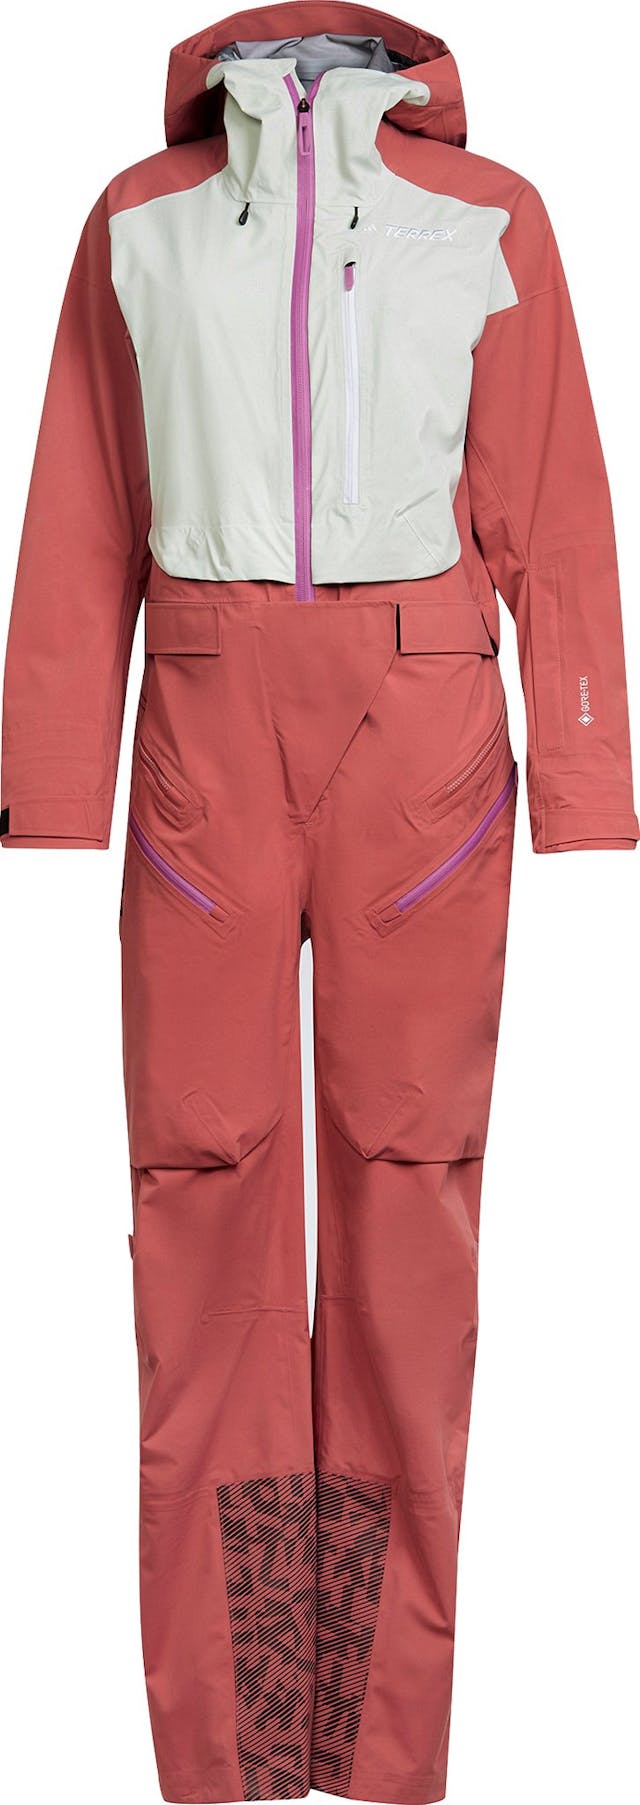 Product image for Terrex 3-Layer GORE-TEX Snow Suit - Women's